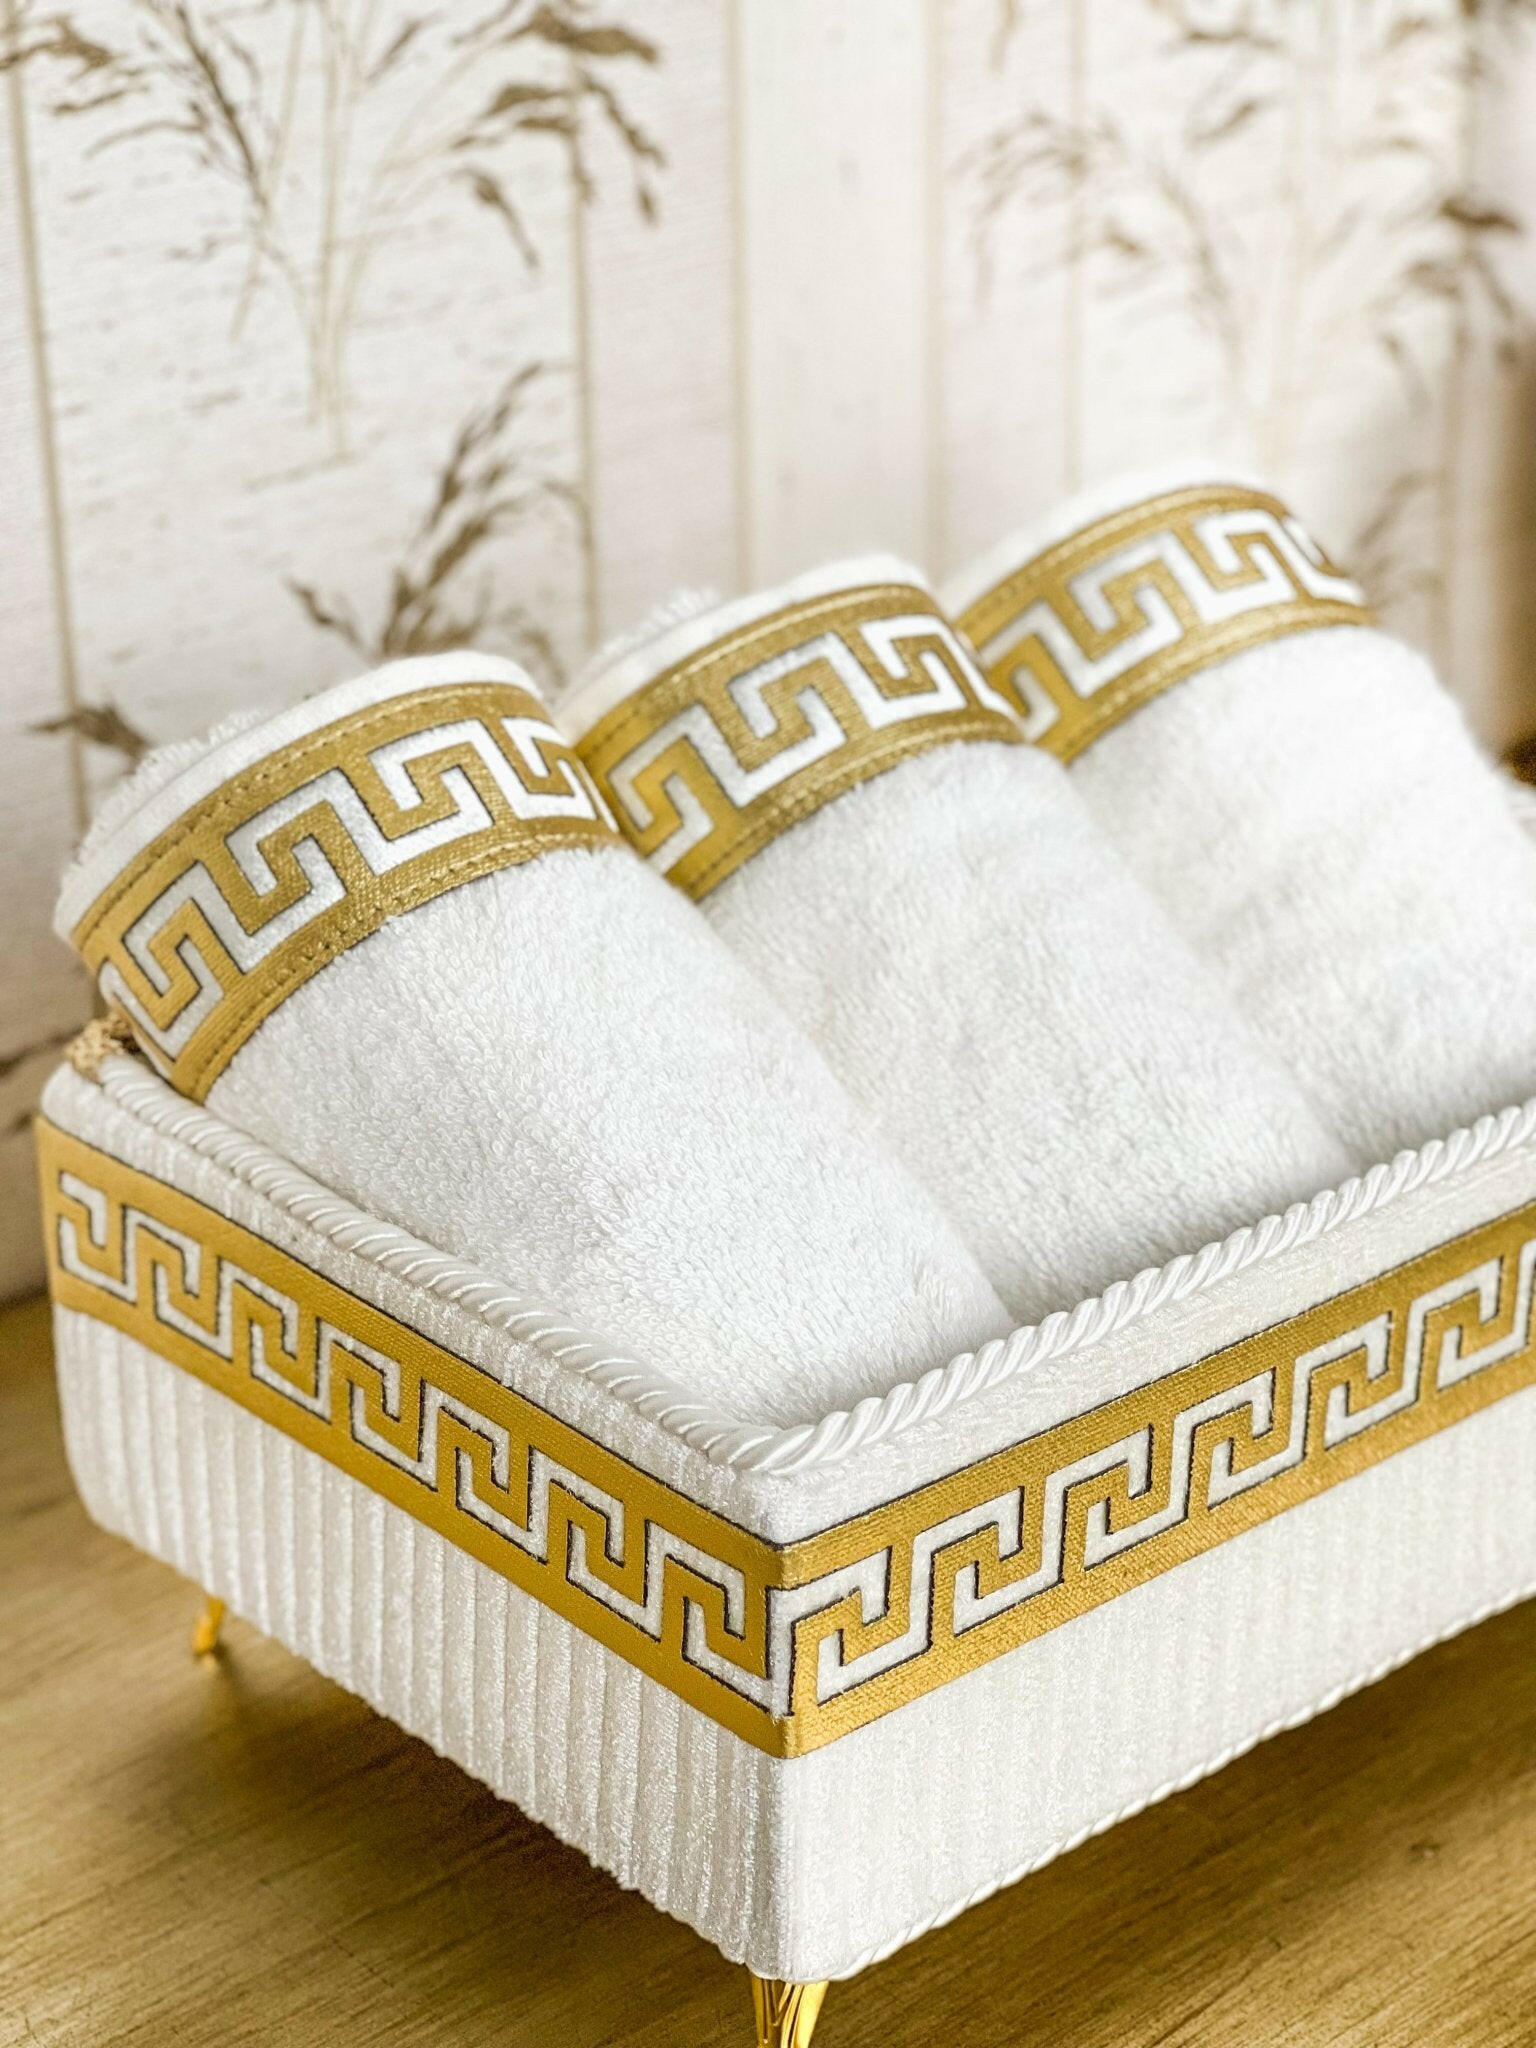 Anka Towel Box Set - Creative Home Designs, Cream & Gold Bathroom Towel Box, Versace Style Greek Key Patterned Cream & Gold Bathroom Decor, Bamboo Cream & Gold Luxury Turkish Towels,TB-CH-ANKACG-BT